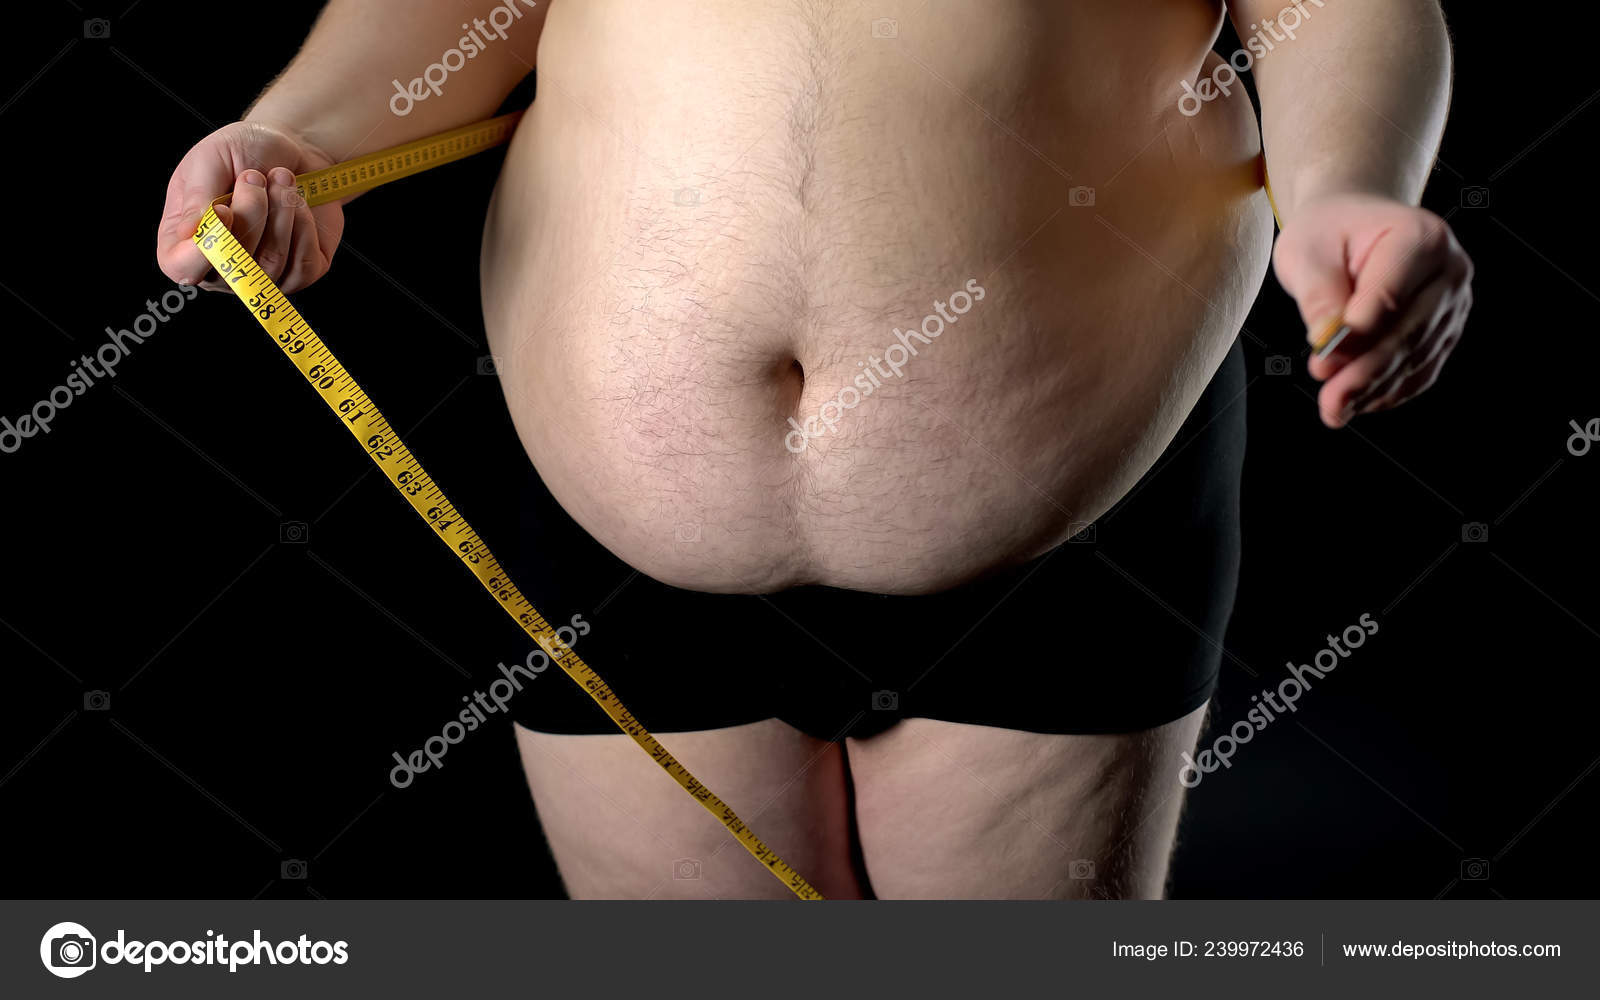 https://st4.depositphotos.com/3001967/23997/i/1600/depositphotos_239972436-stock-photo-overweight-man-measuring-belly-tape.jpg